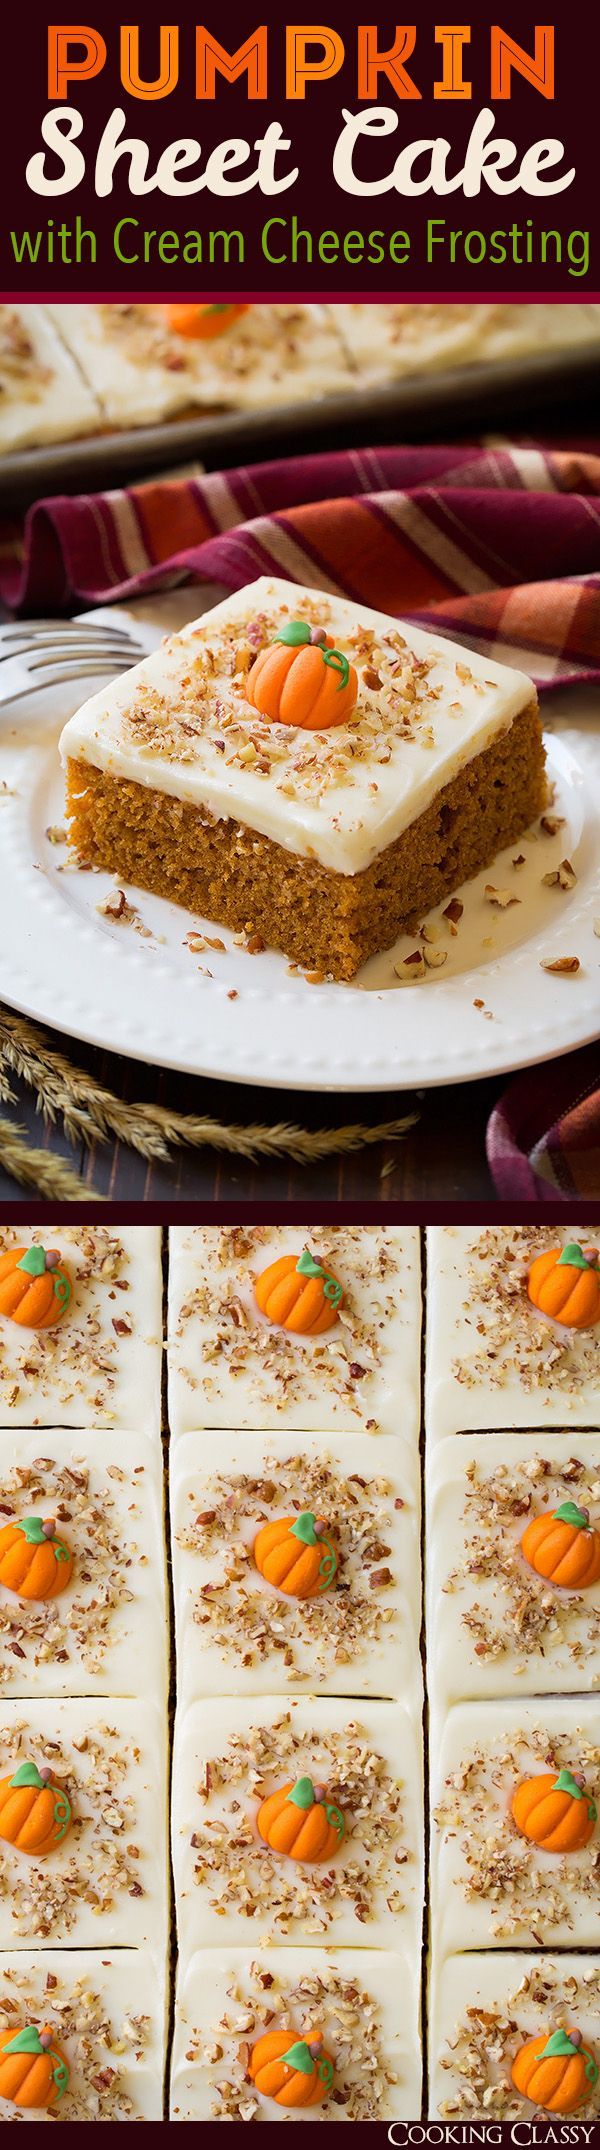 Pumpkin Sheet Cake with Cream Cheese Frosting – a cookie sheet full of pumpkin cak